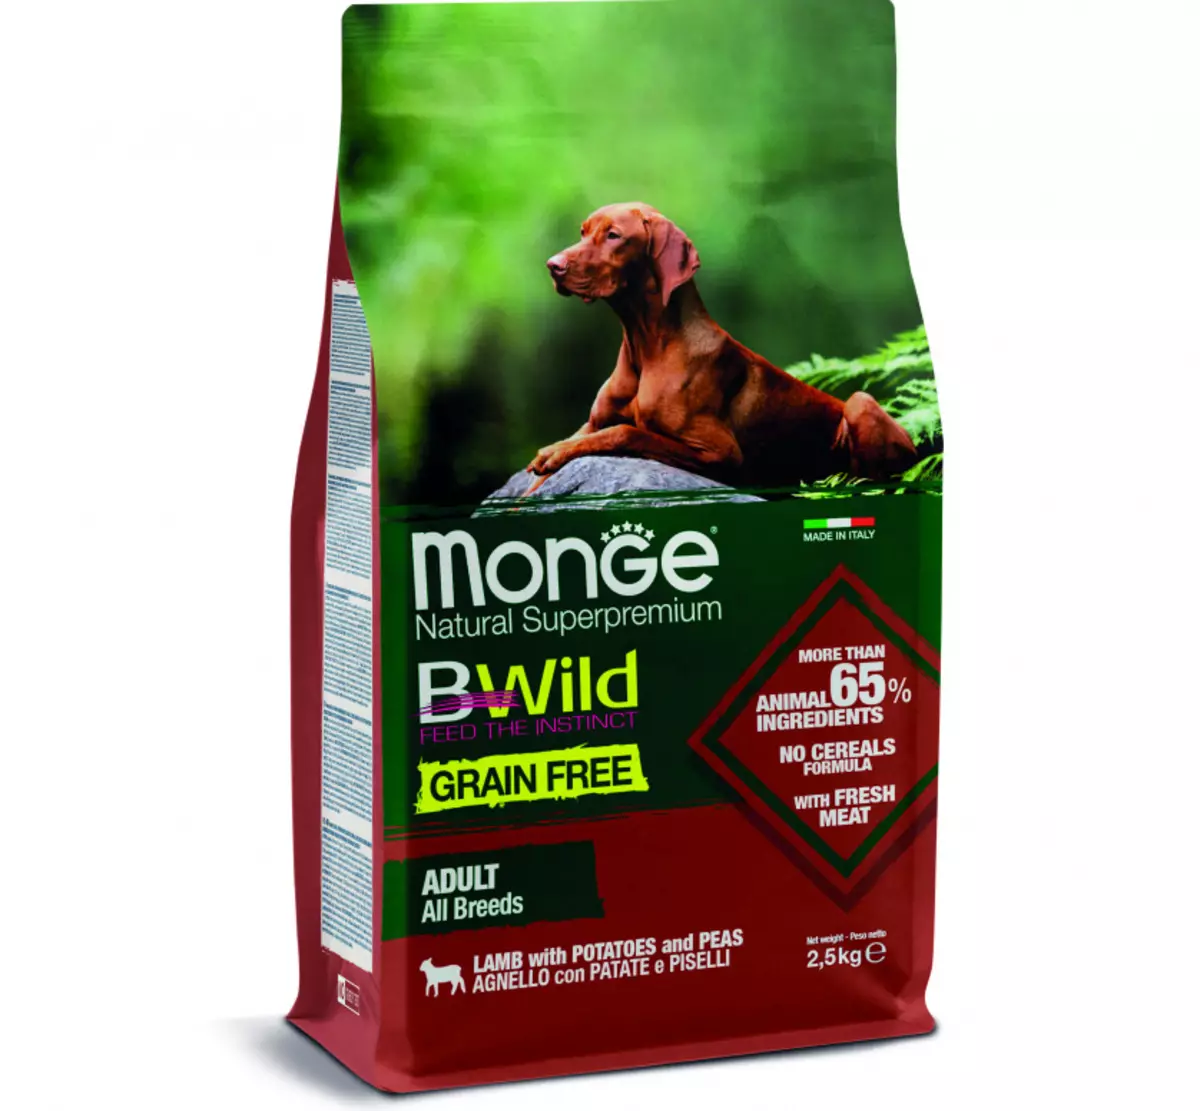 MONGE تغذية الكلب: تكوين الأغذية المعلبة (الرطب تغذية الكلب) والأعلاف الجافة، والحزم من 12-15 كجم. تغذية الرسول مع خروف الكلب Bwild الحبوب الحرة وغيرها من المنتجات والتعليقات 21642_14